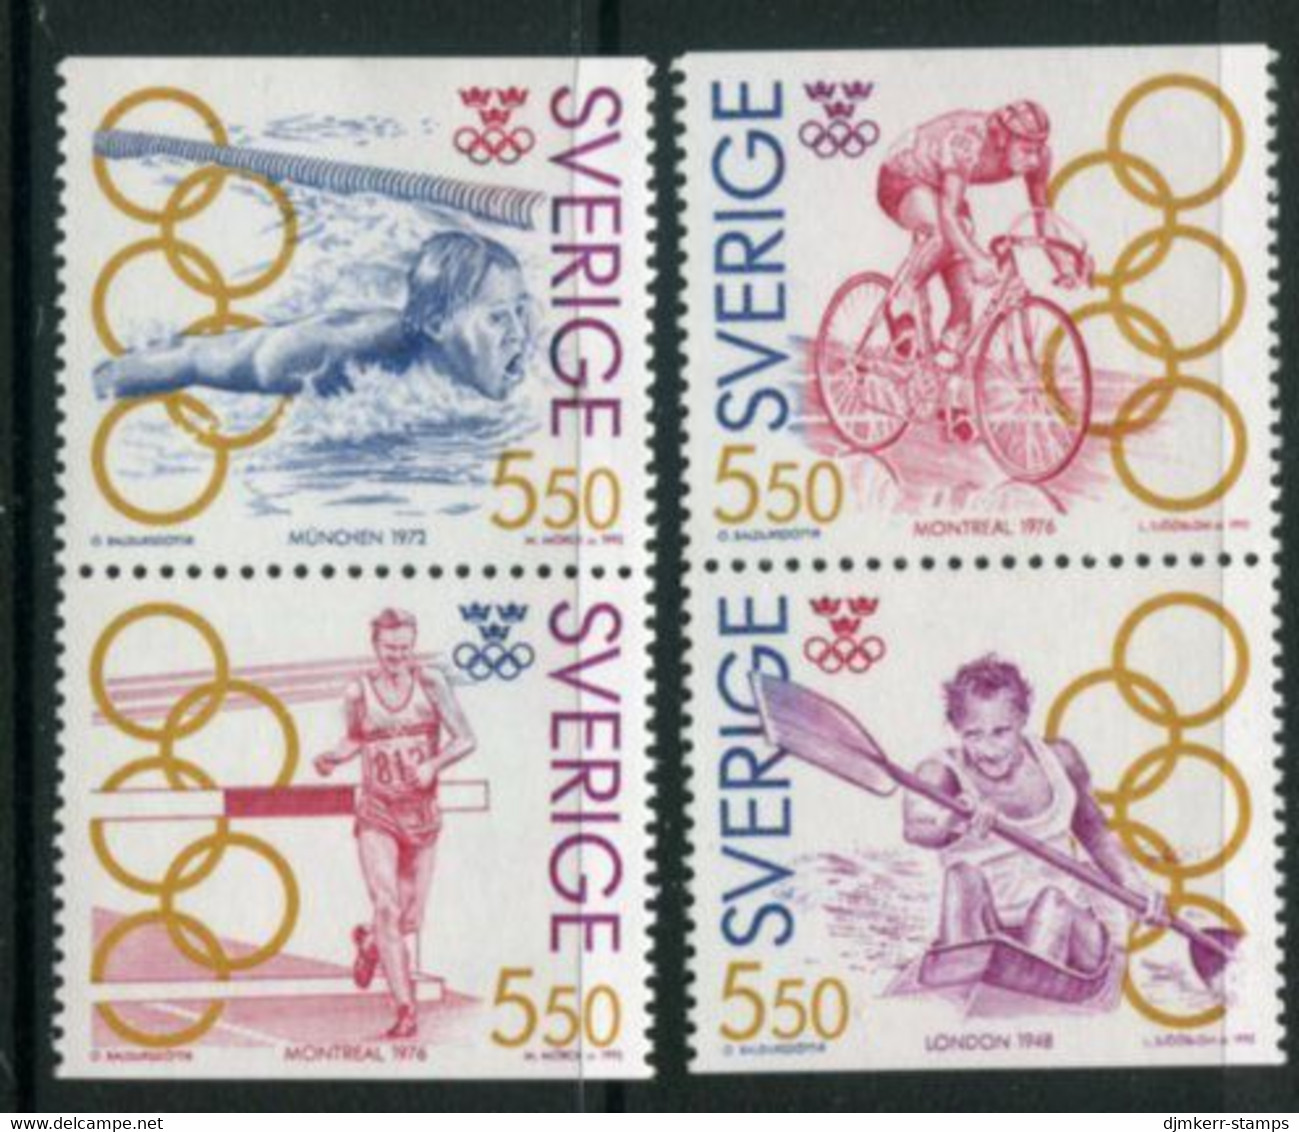 SWEDEN 1992 Olympic Medal Winners III MNH / **   Michel 1721-24 - Nuovi